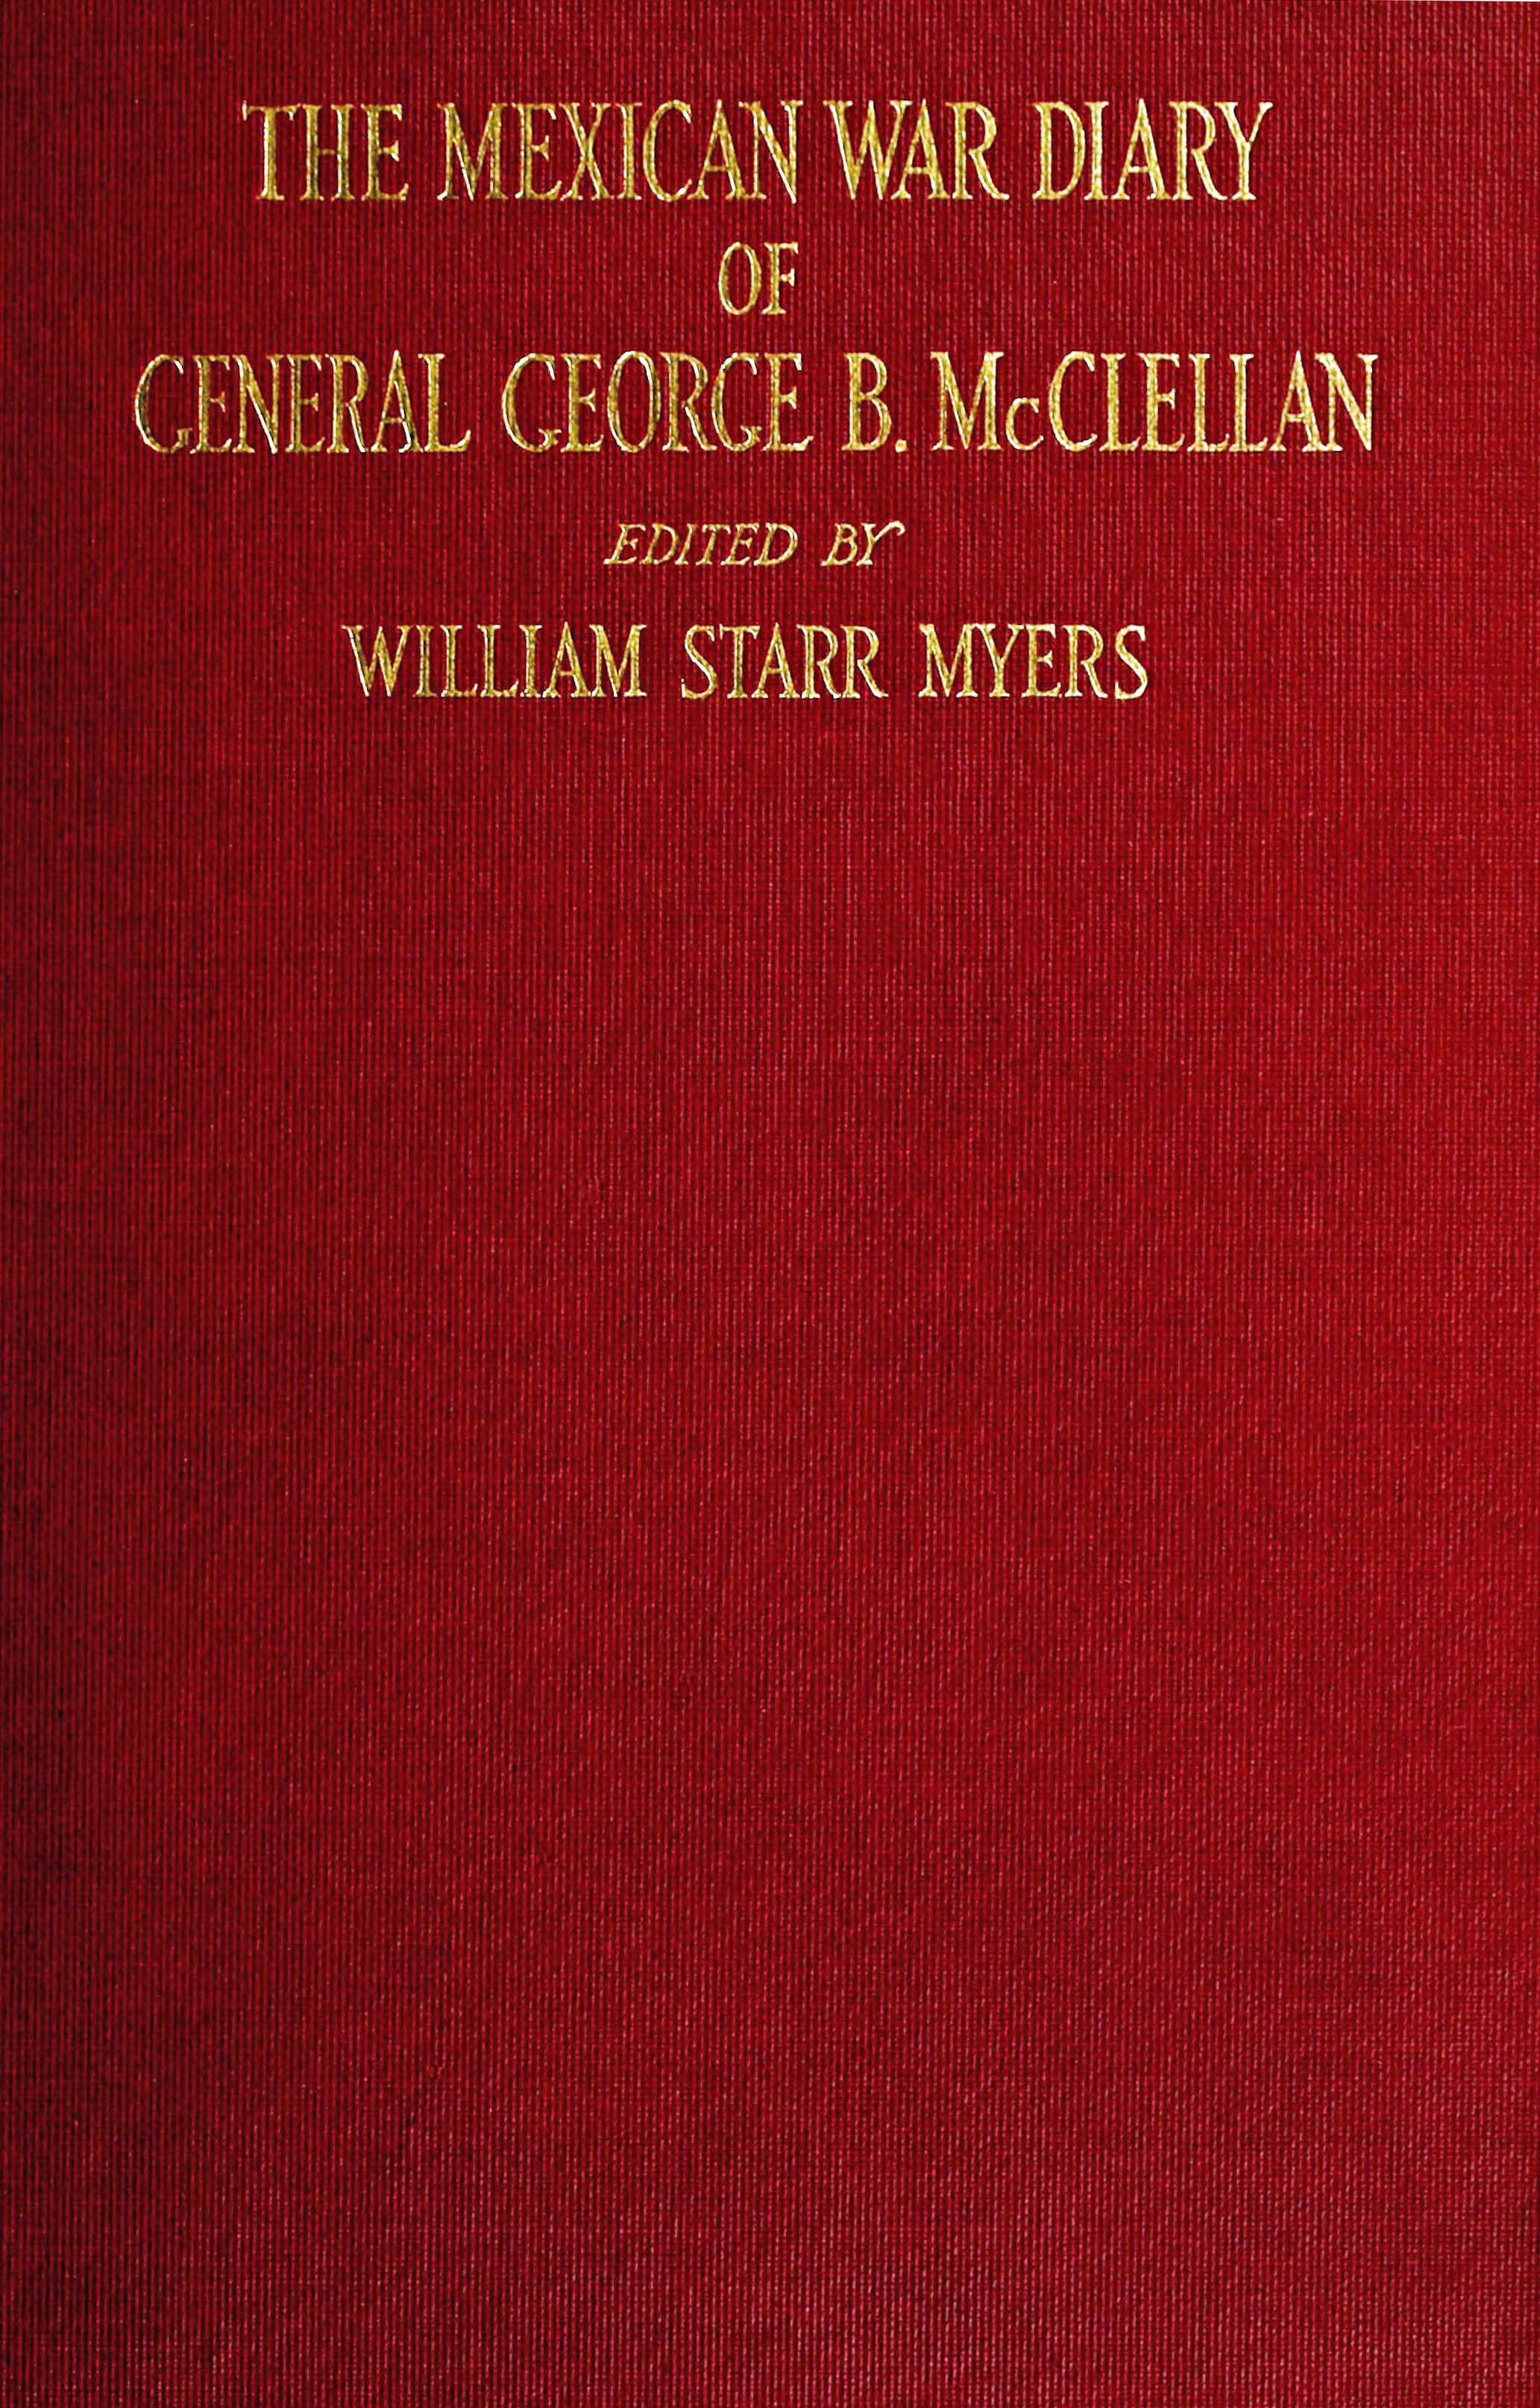 The Mexican War diary of George B. McClellan